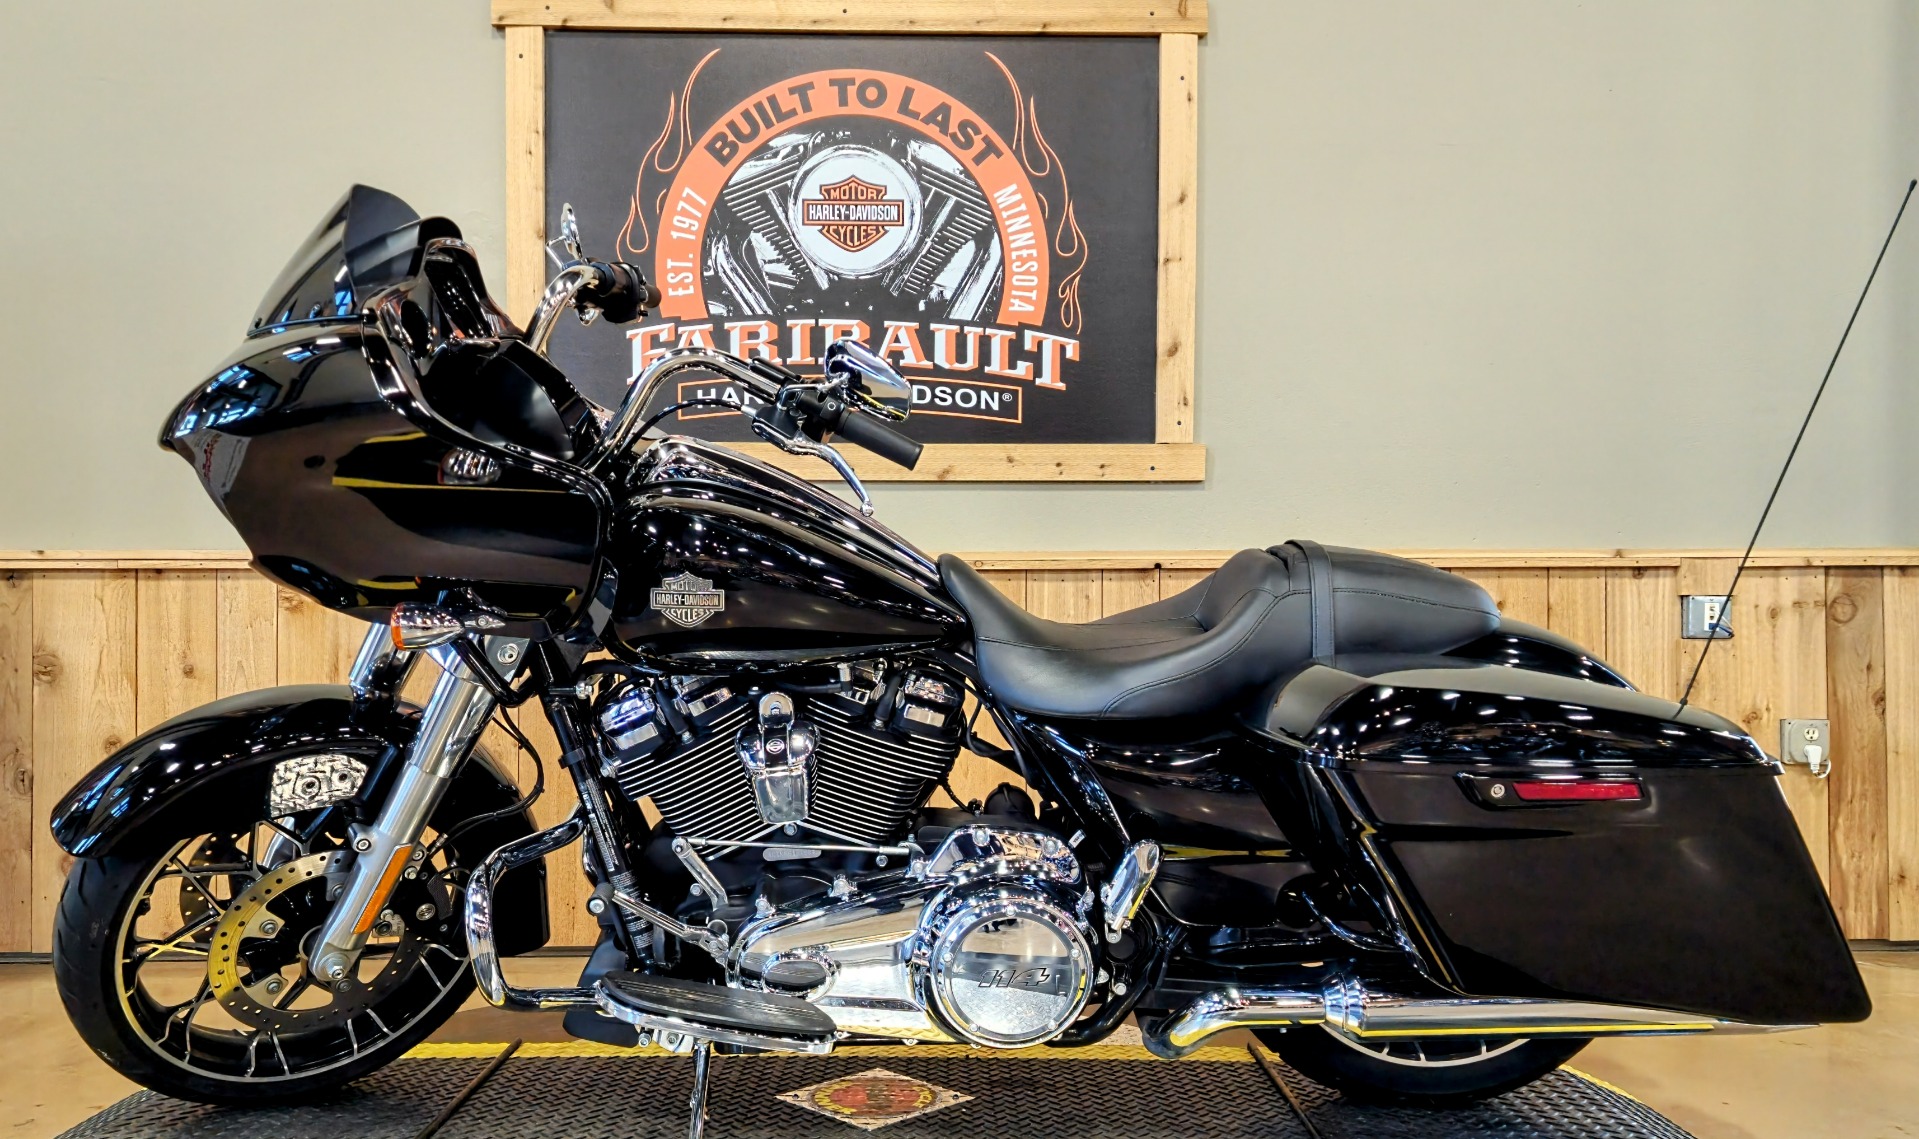 2022 Harley-Davidson Road Glide® Special in Faribault, Minnesota - Photo 5